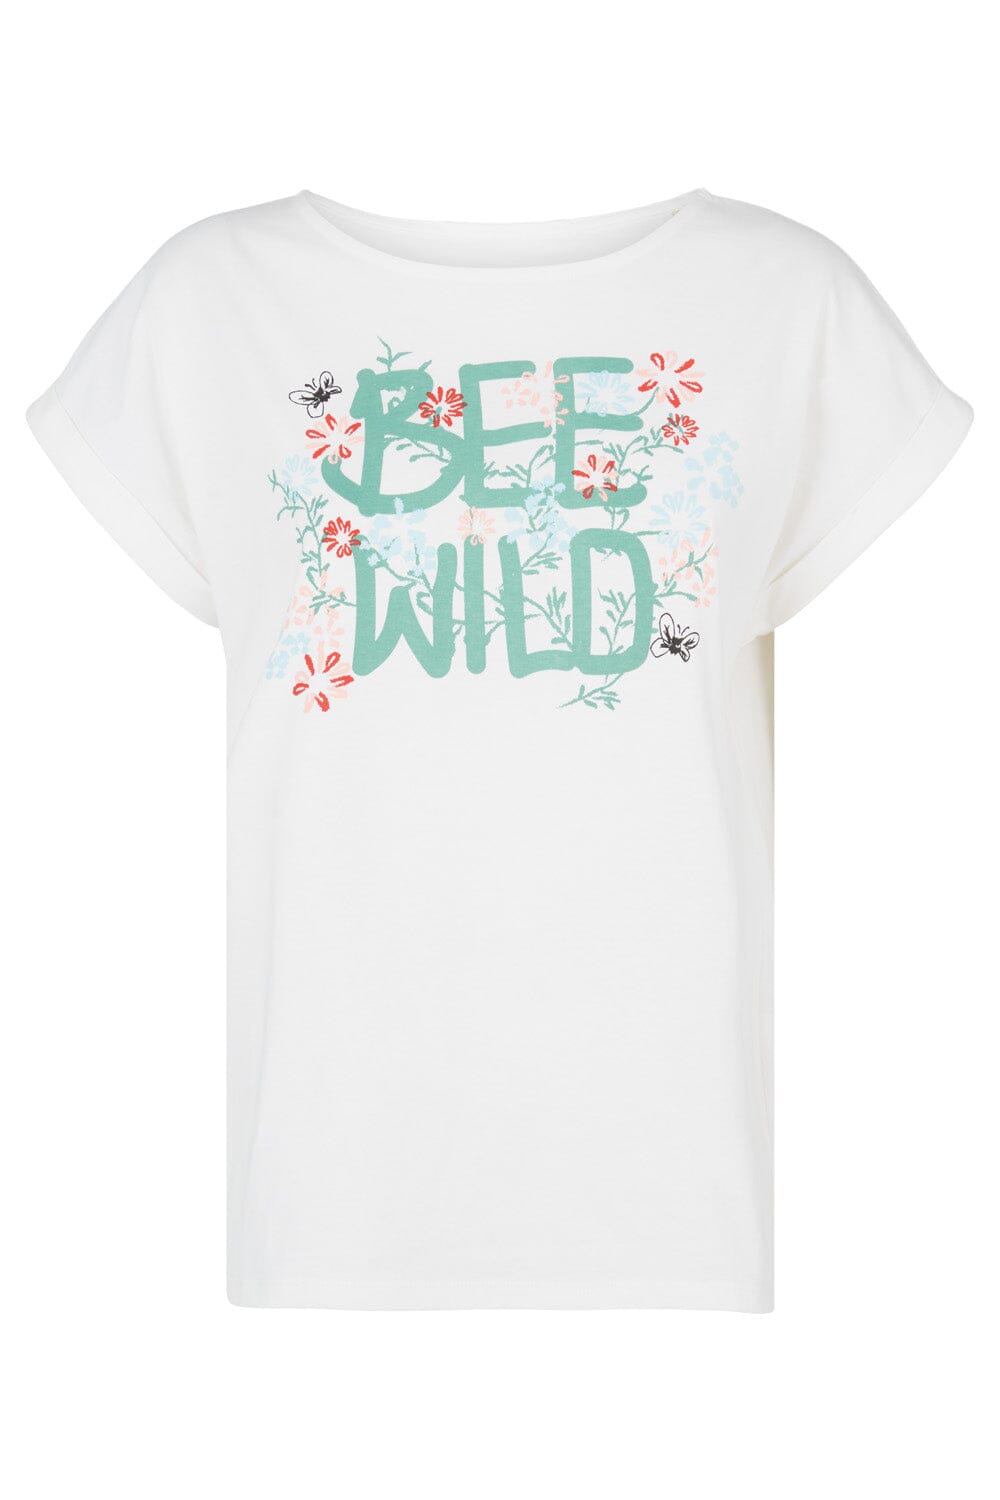 People Tree - Bee Wild Print Tee - 100% organic cotton - Weekendbee - sustainable sportswear